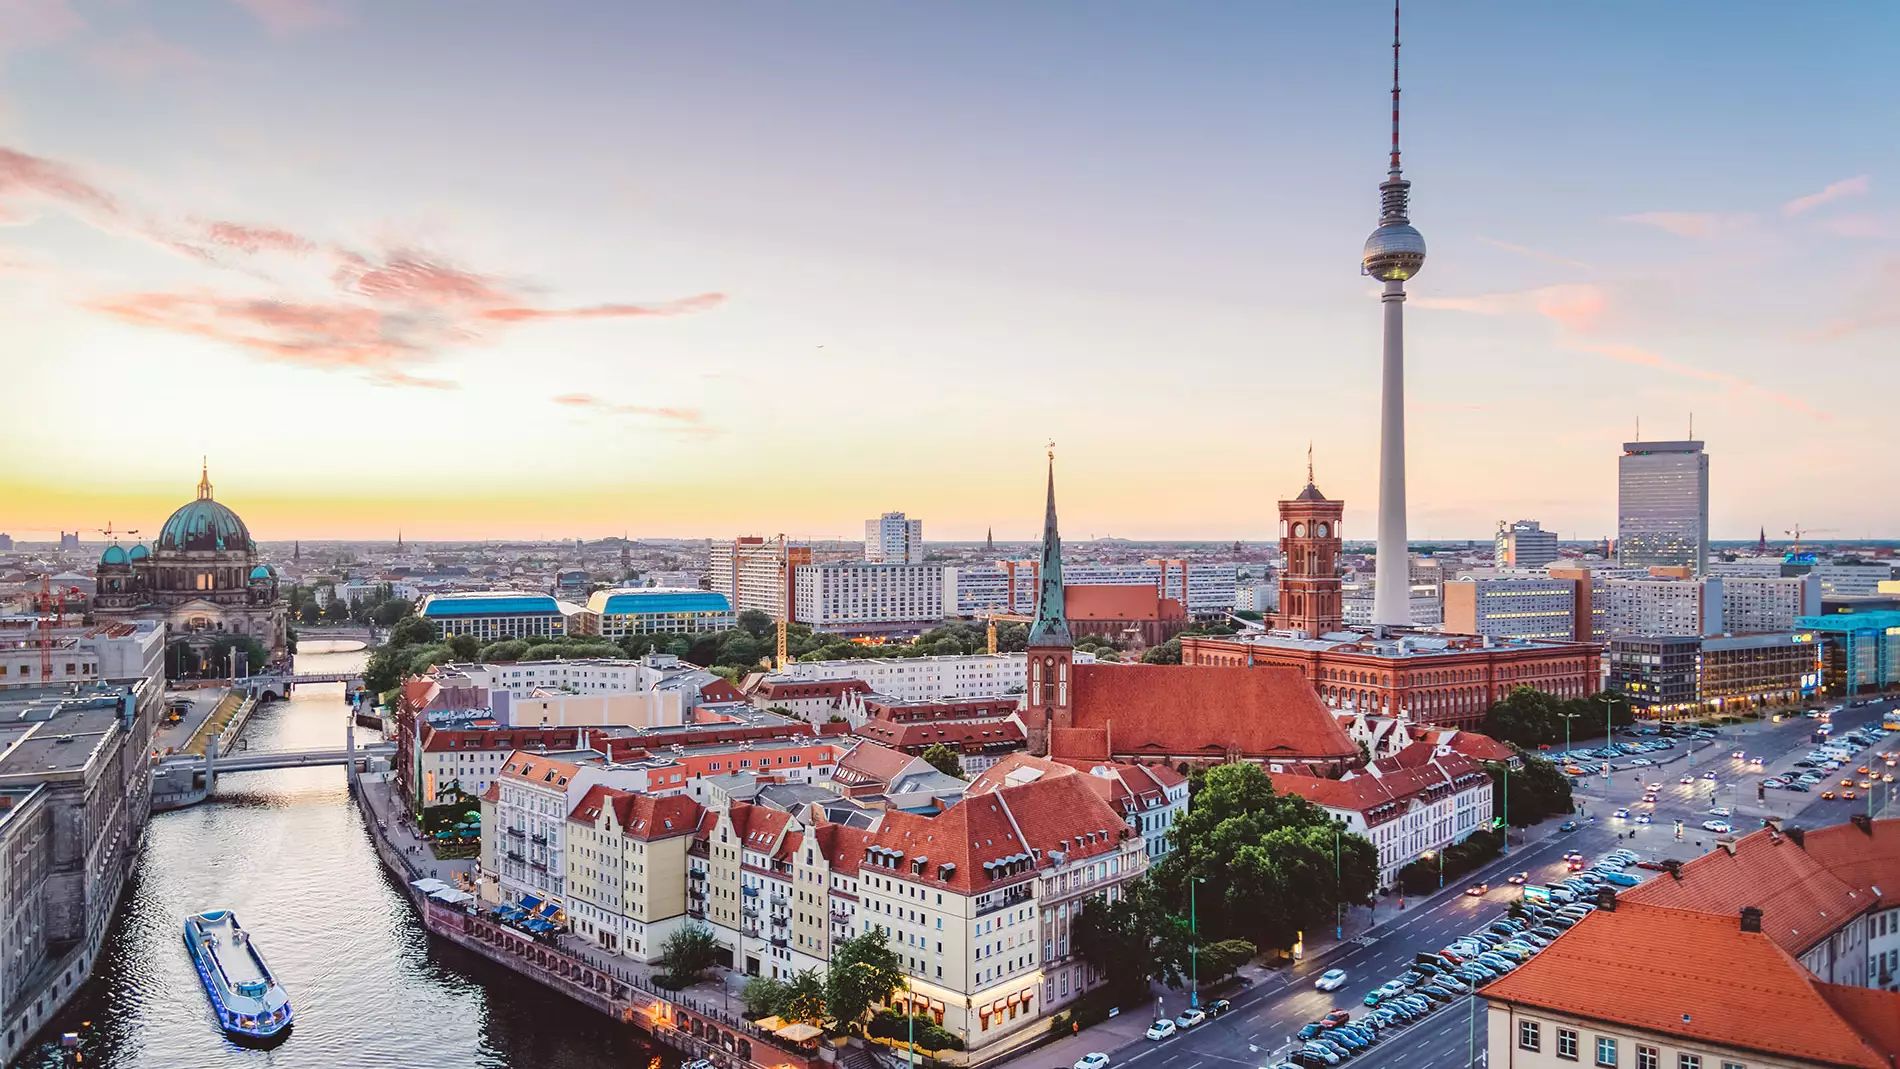 Berlin Fernsehturm © Gettyimages.com, Nikada